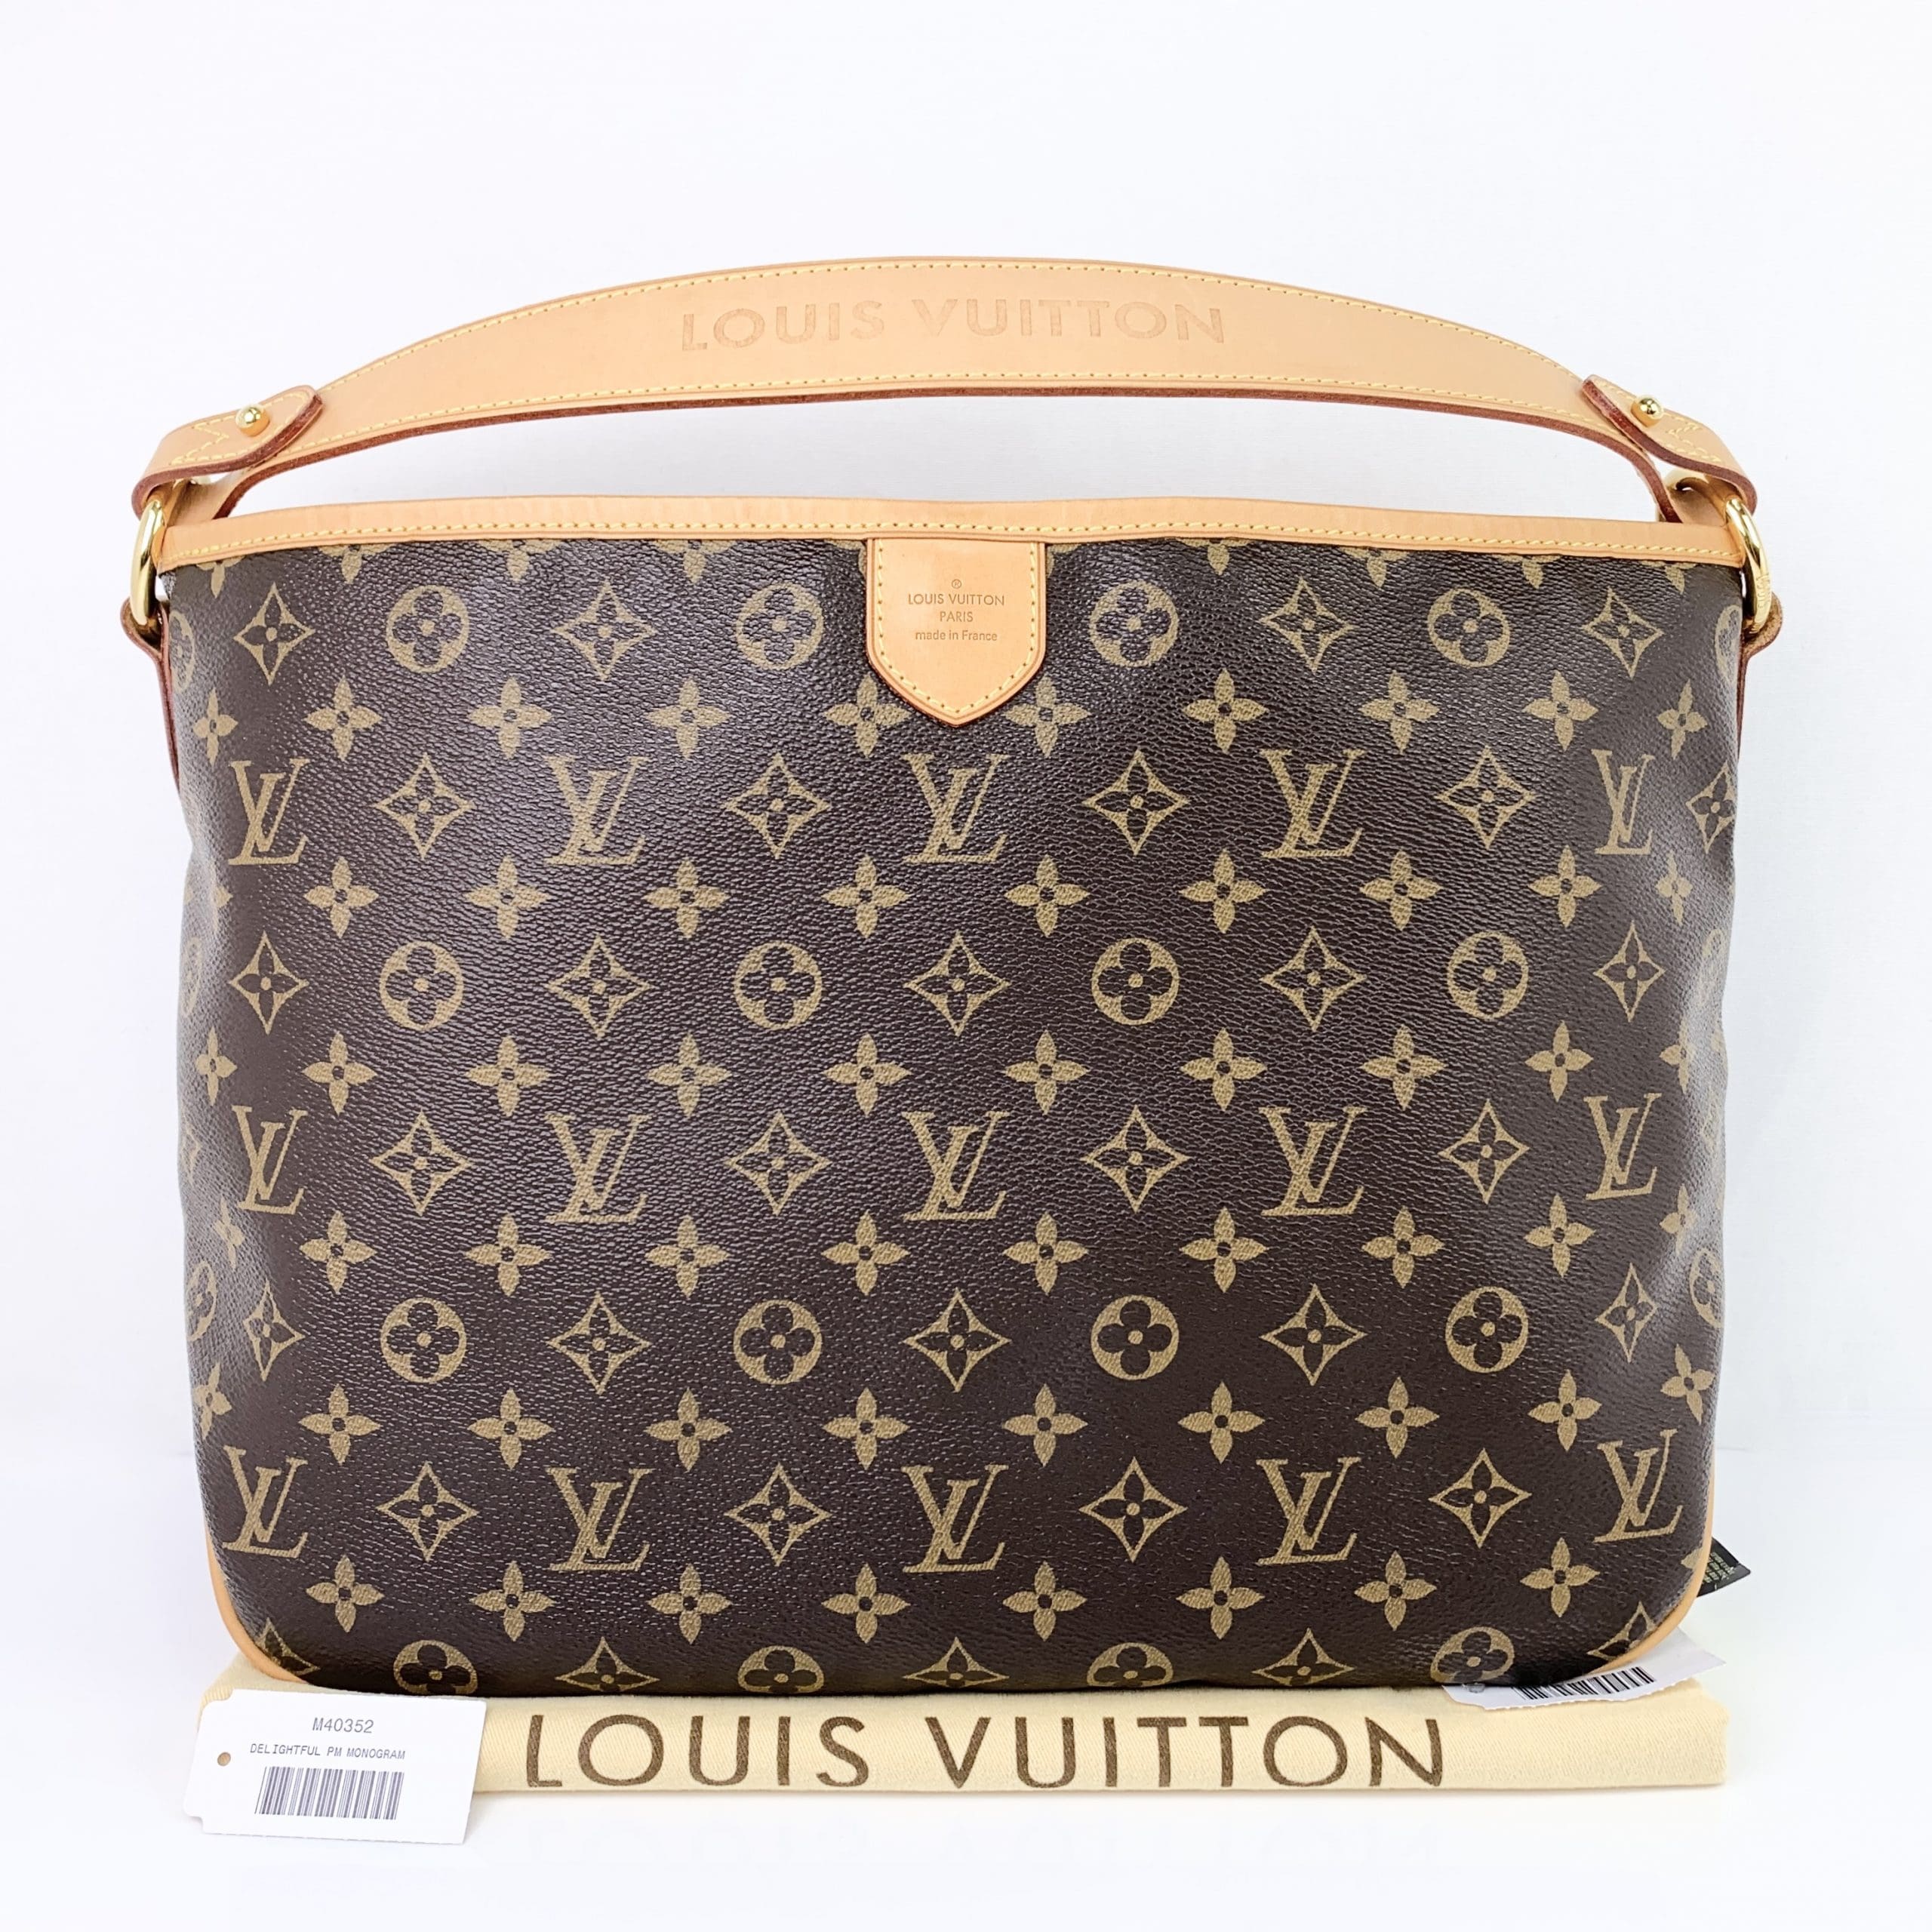 Louis Vuitton Delightful PM *Discontinued model*, Women's Fashion